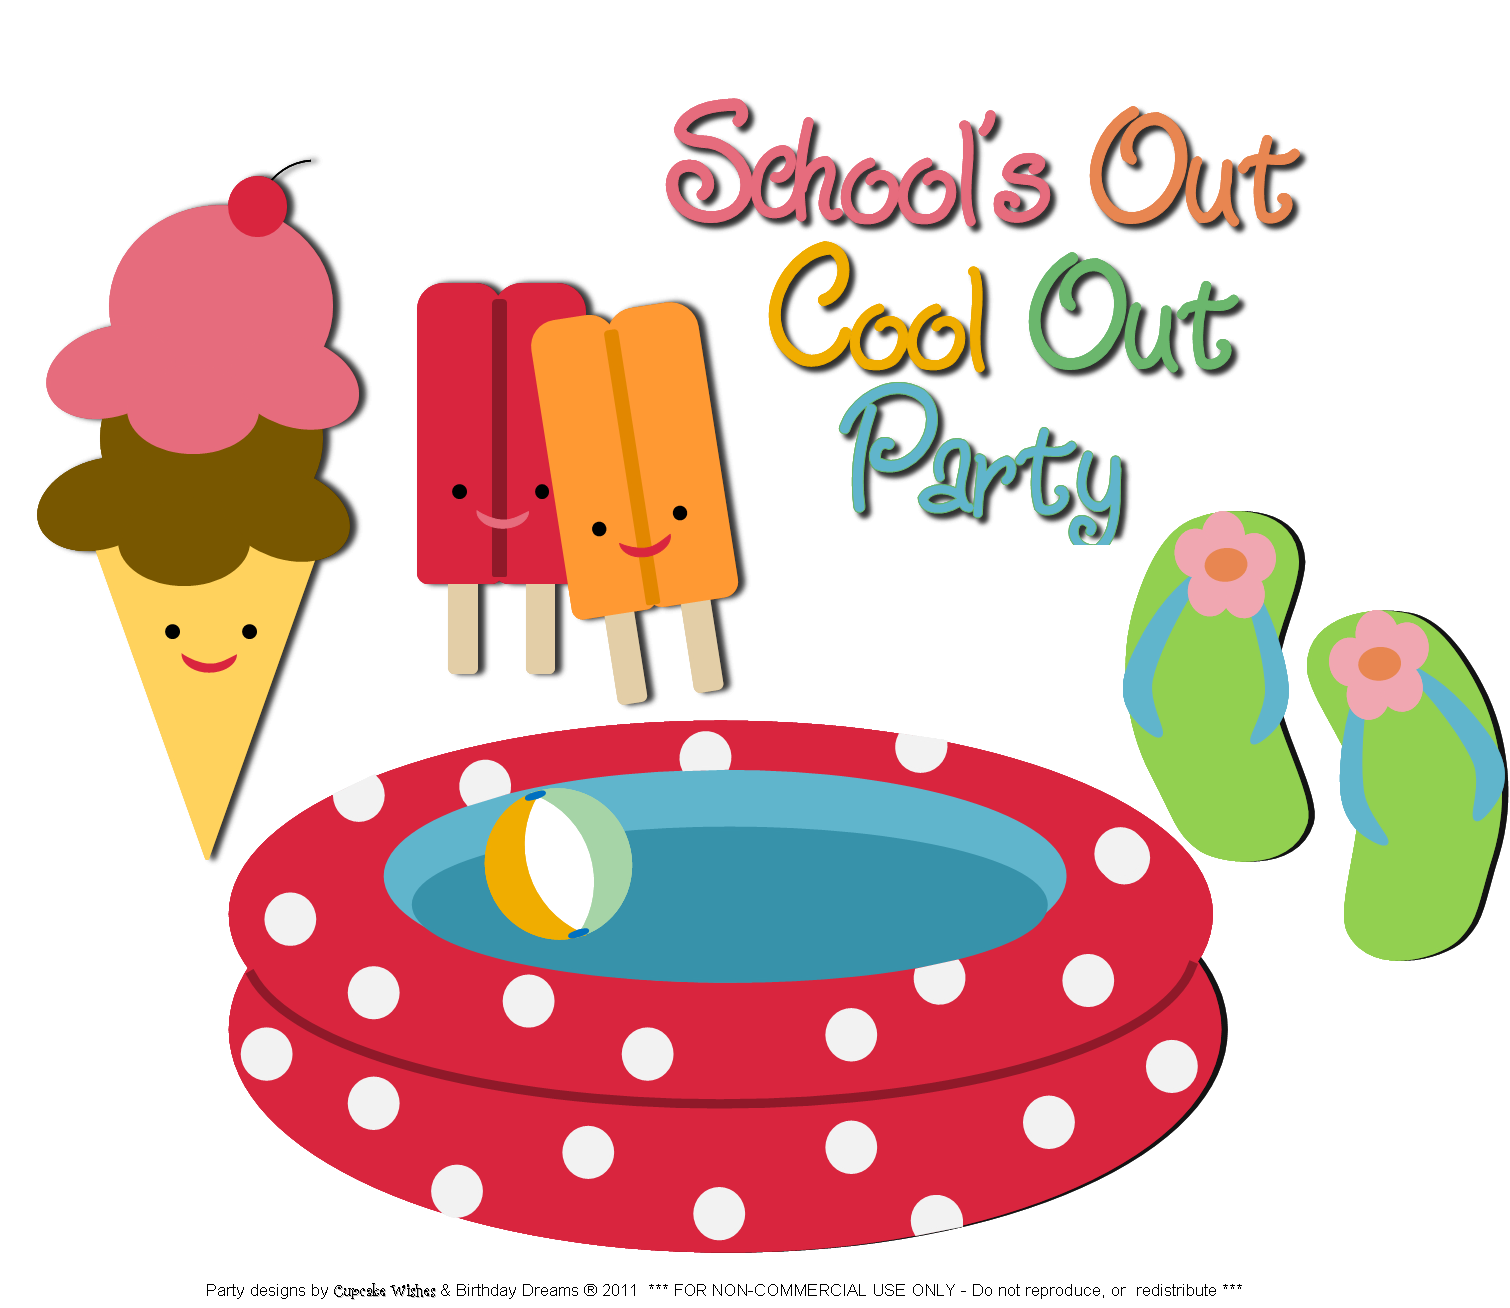 Party school party